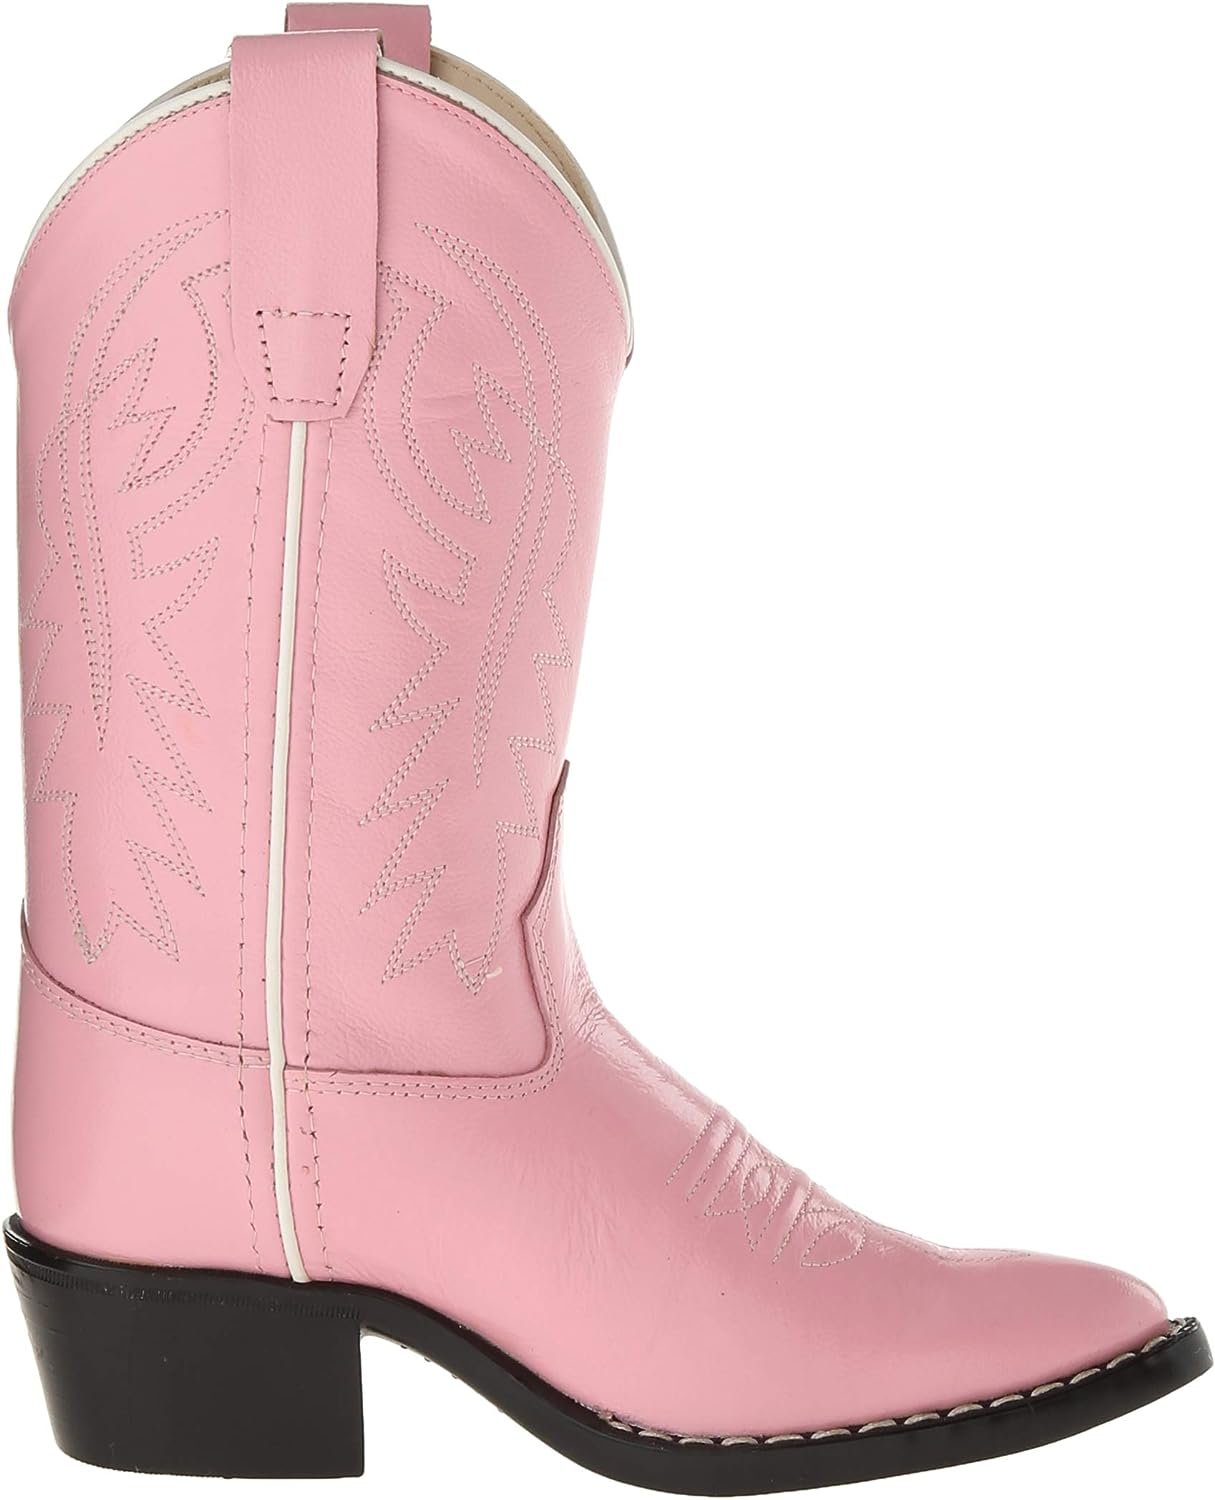 Old West Girls' J Toe Western Boot